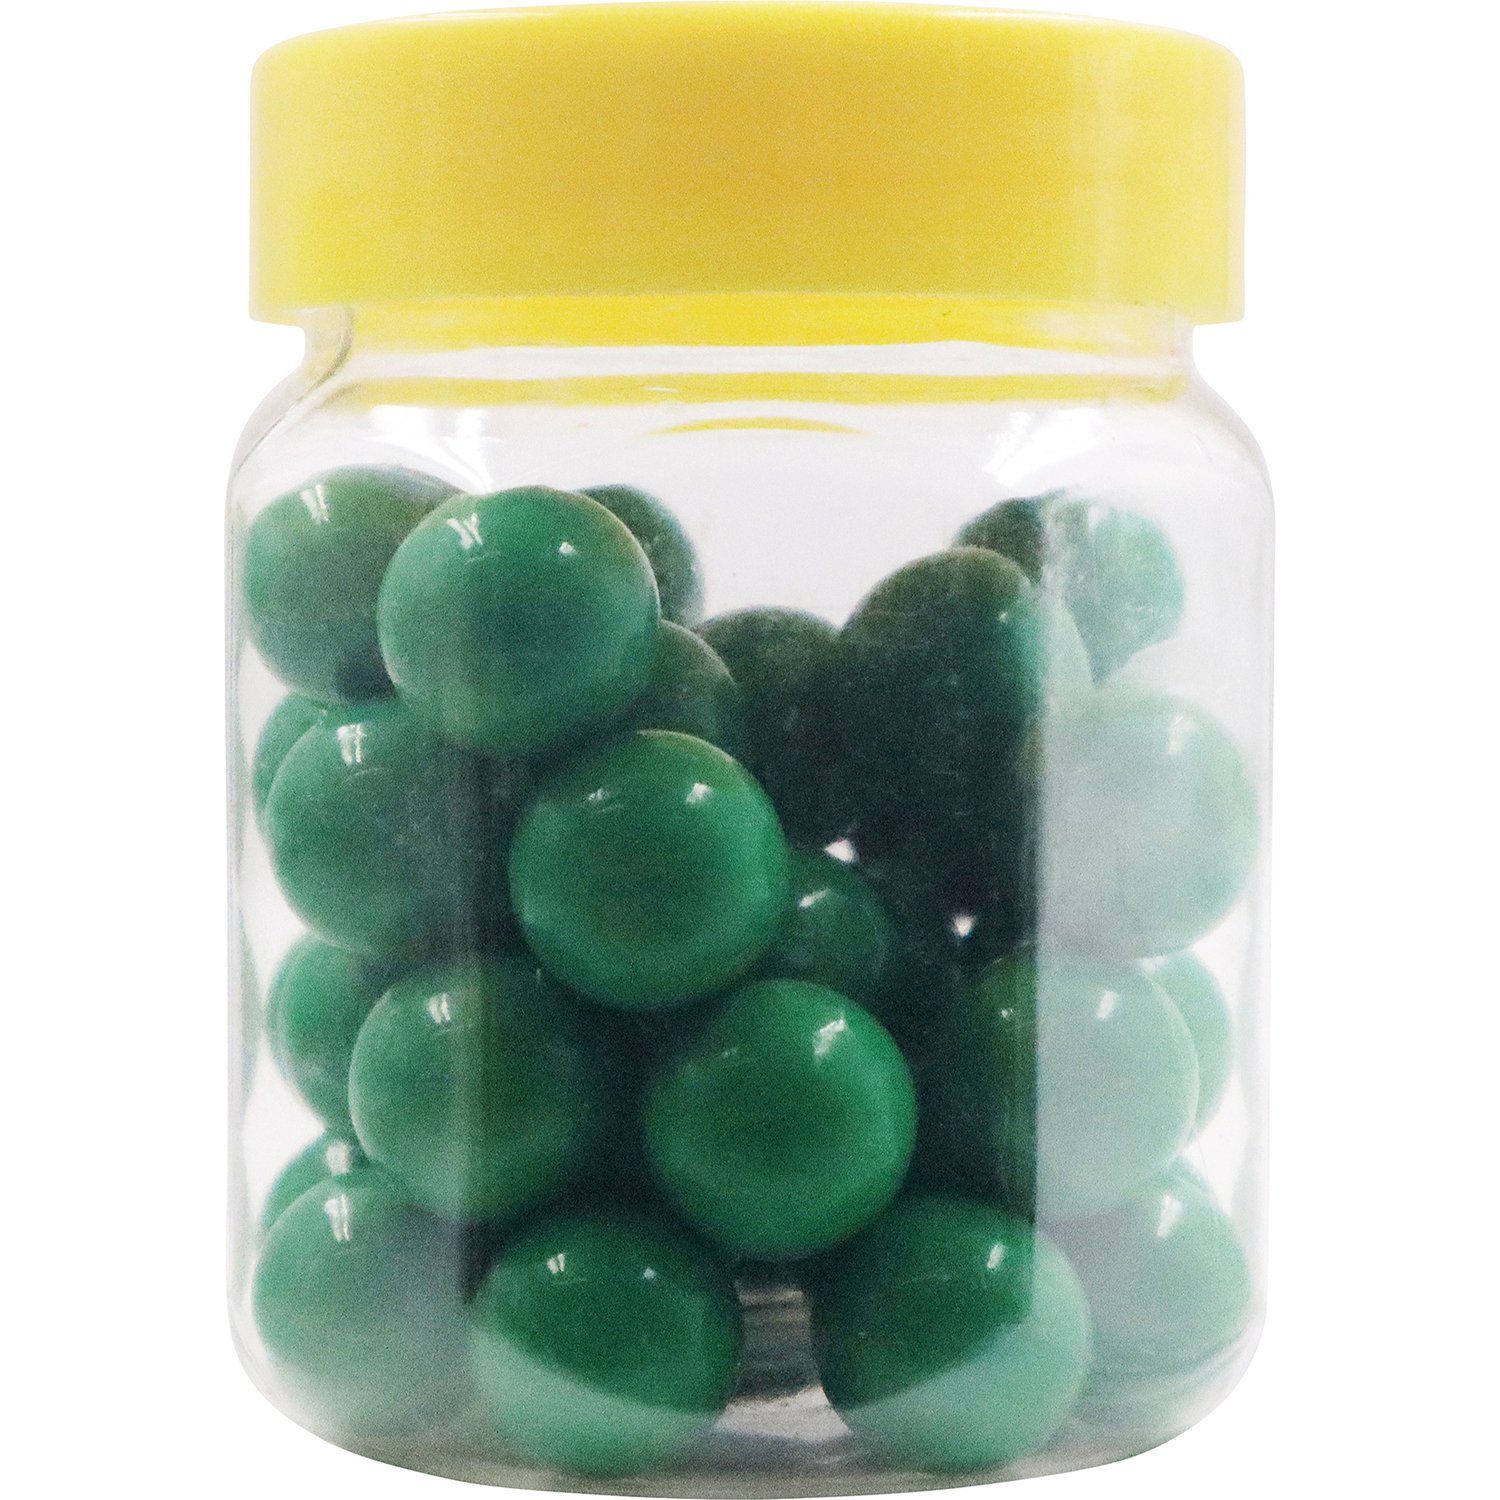 EDUPLAY Experimentierkasten 40 grüne Perlen zu Perlenbild-Baukasten